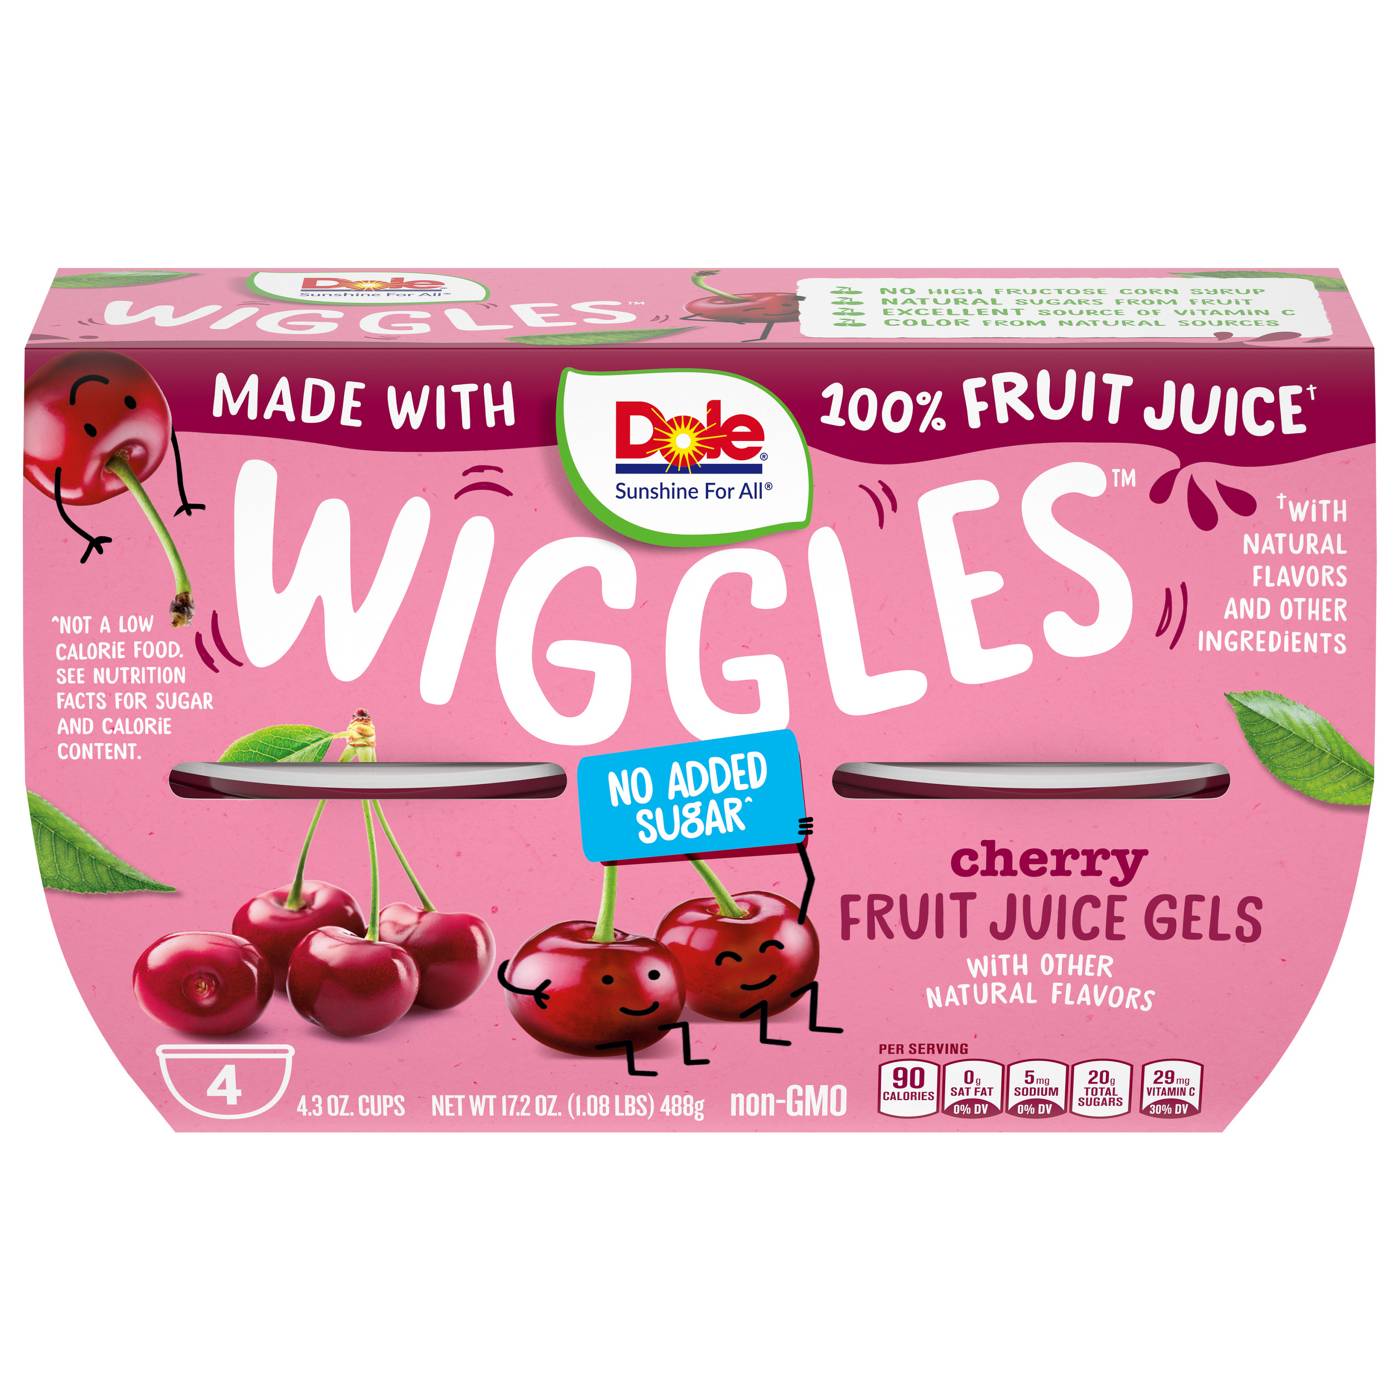 Dole Wiggles Cherry Fruit Juice Gels; image 1 of 5